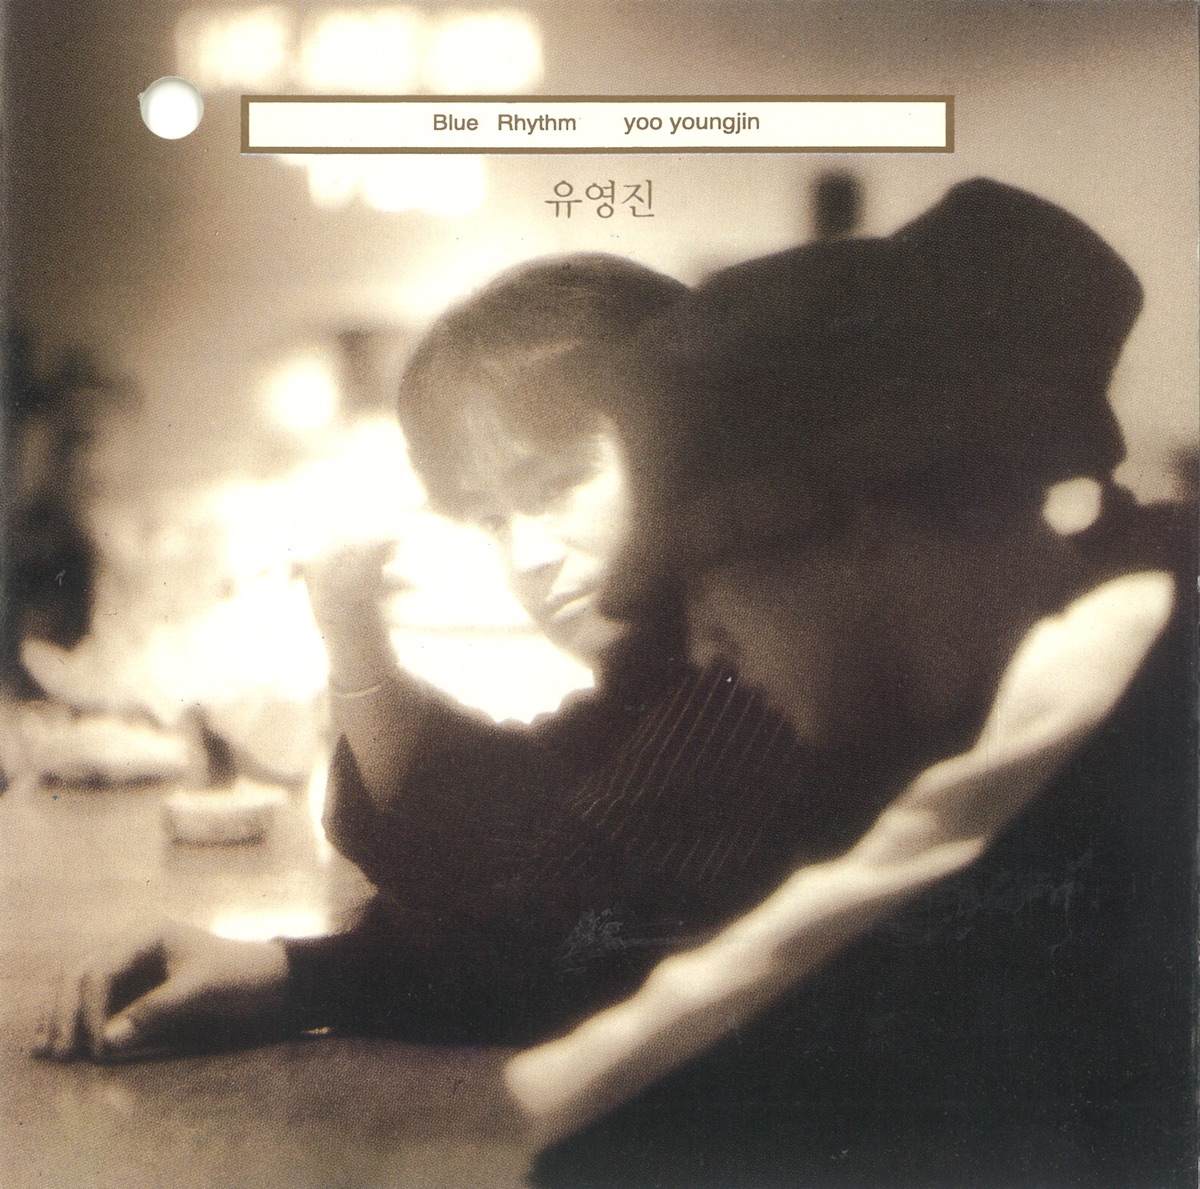 YOO YOUNG JIN – Blue Rhythm – The 2nd Album